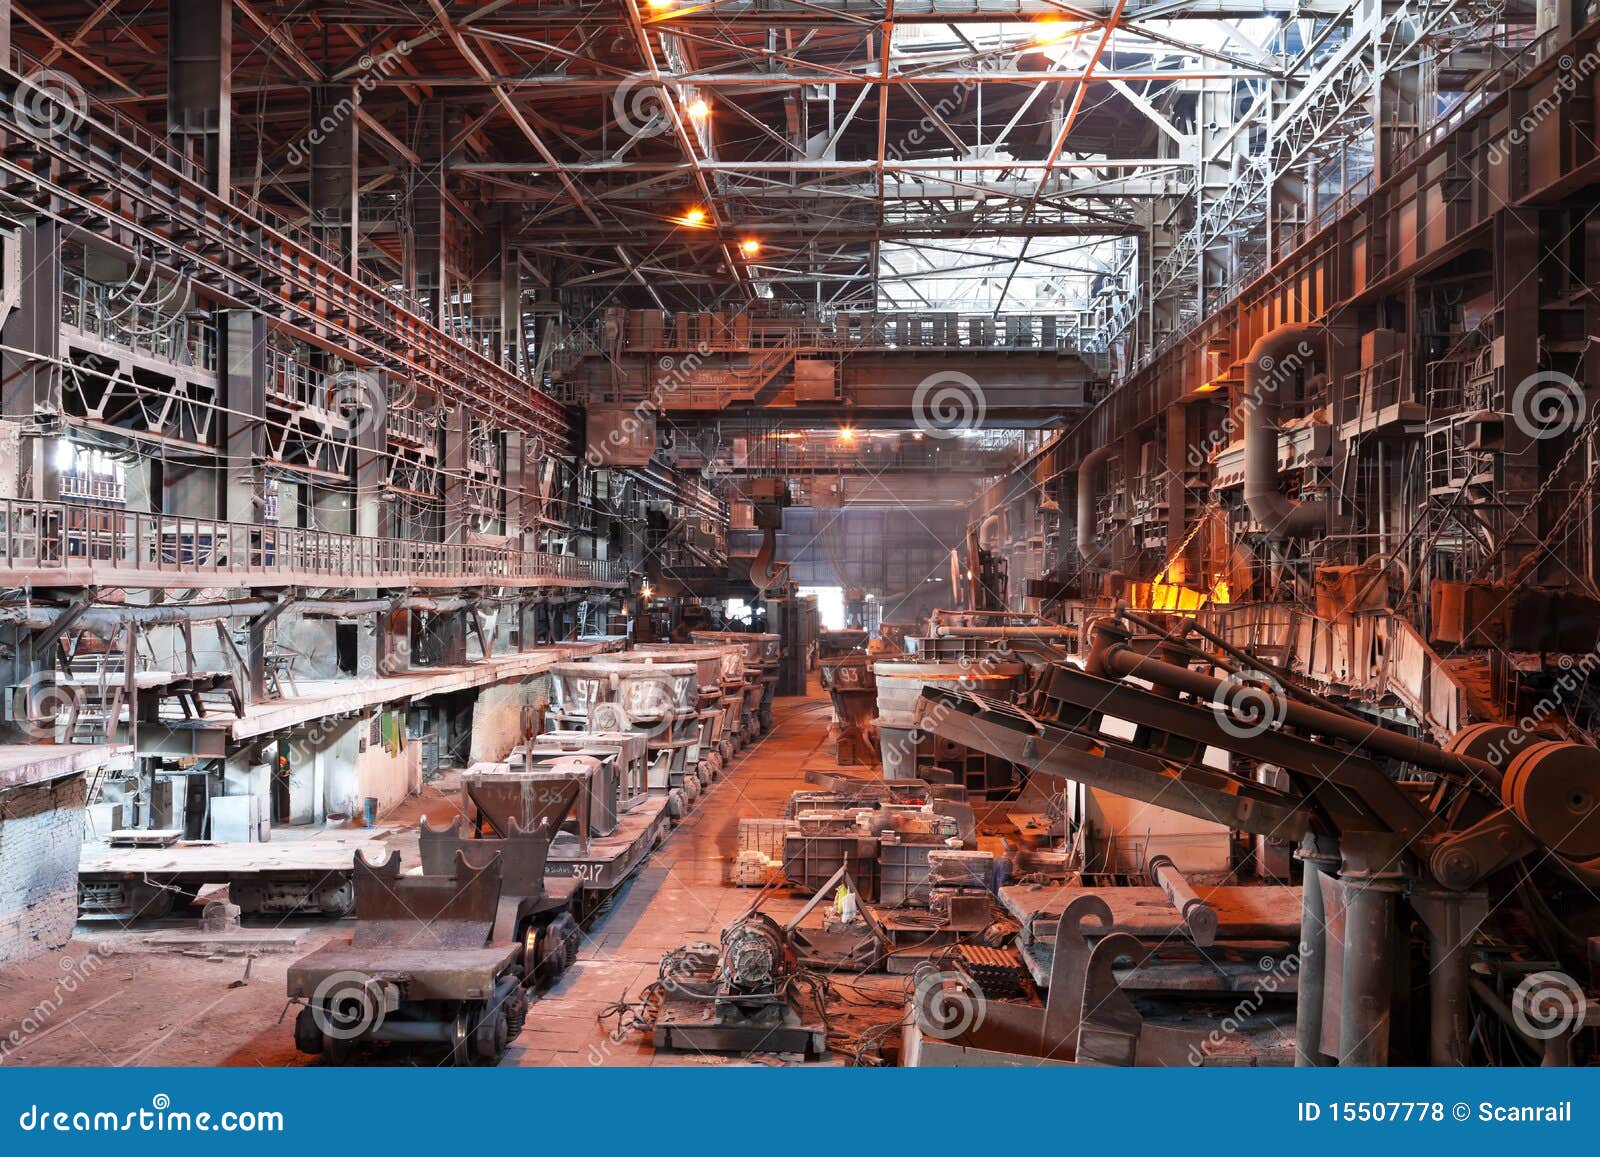 interior of metallurgical plant workshop